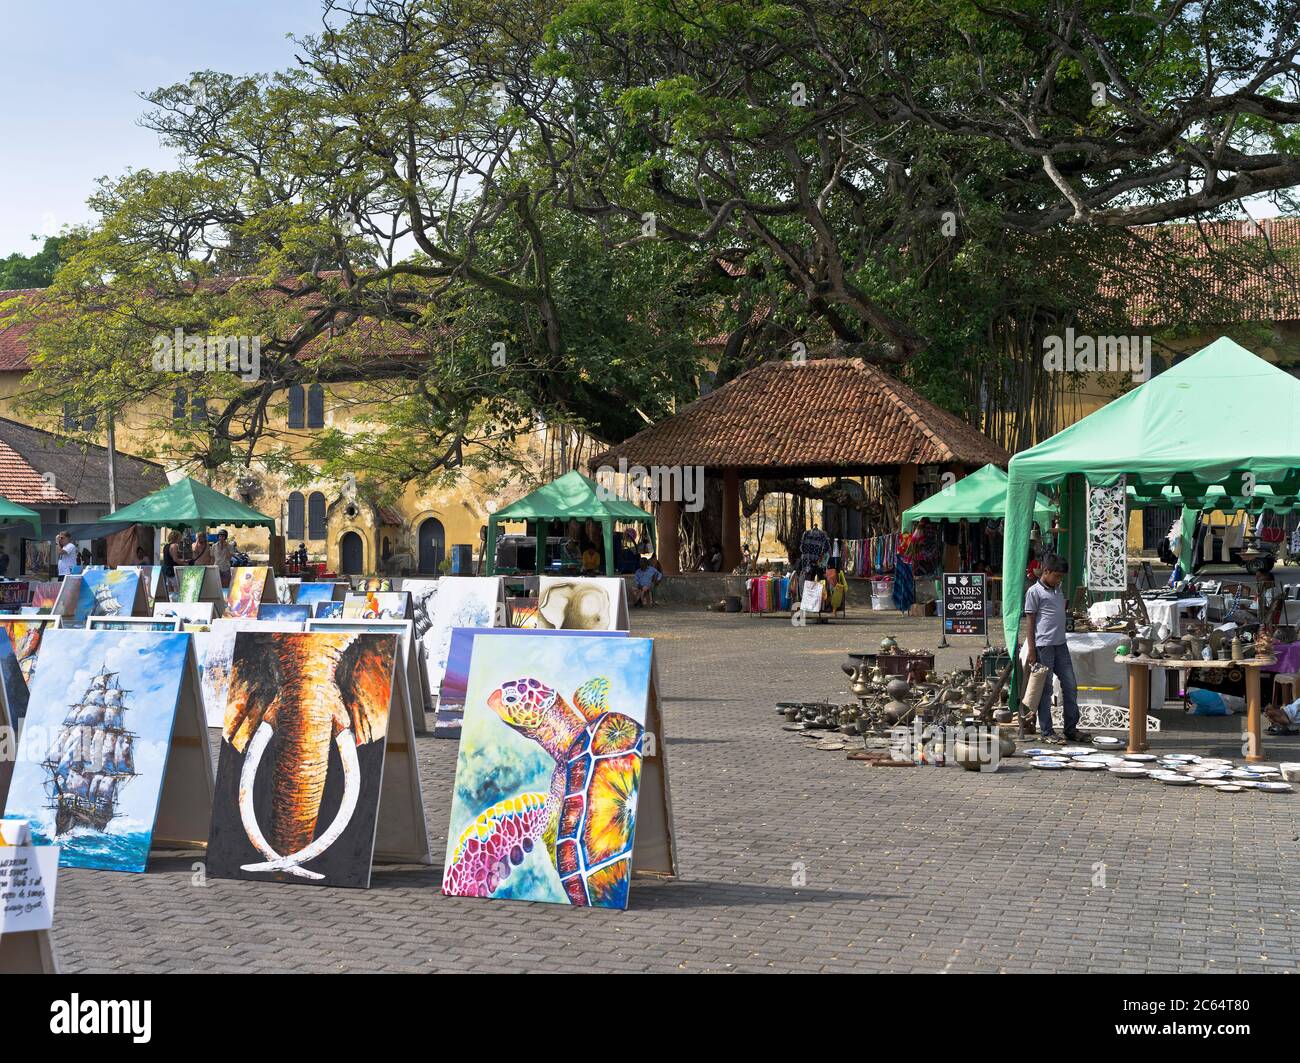 dh Court Square GALLE FORT SRI LANKA Markt Stände Gemälde Kunstwerke Sri Lanka Märkte Stockfoto